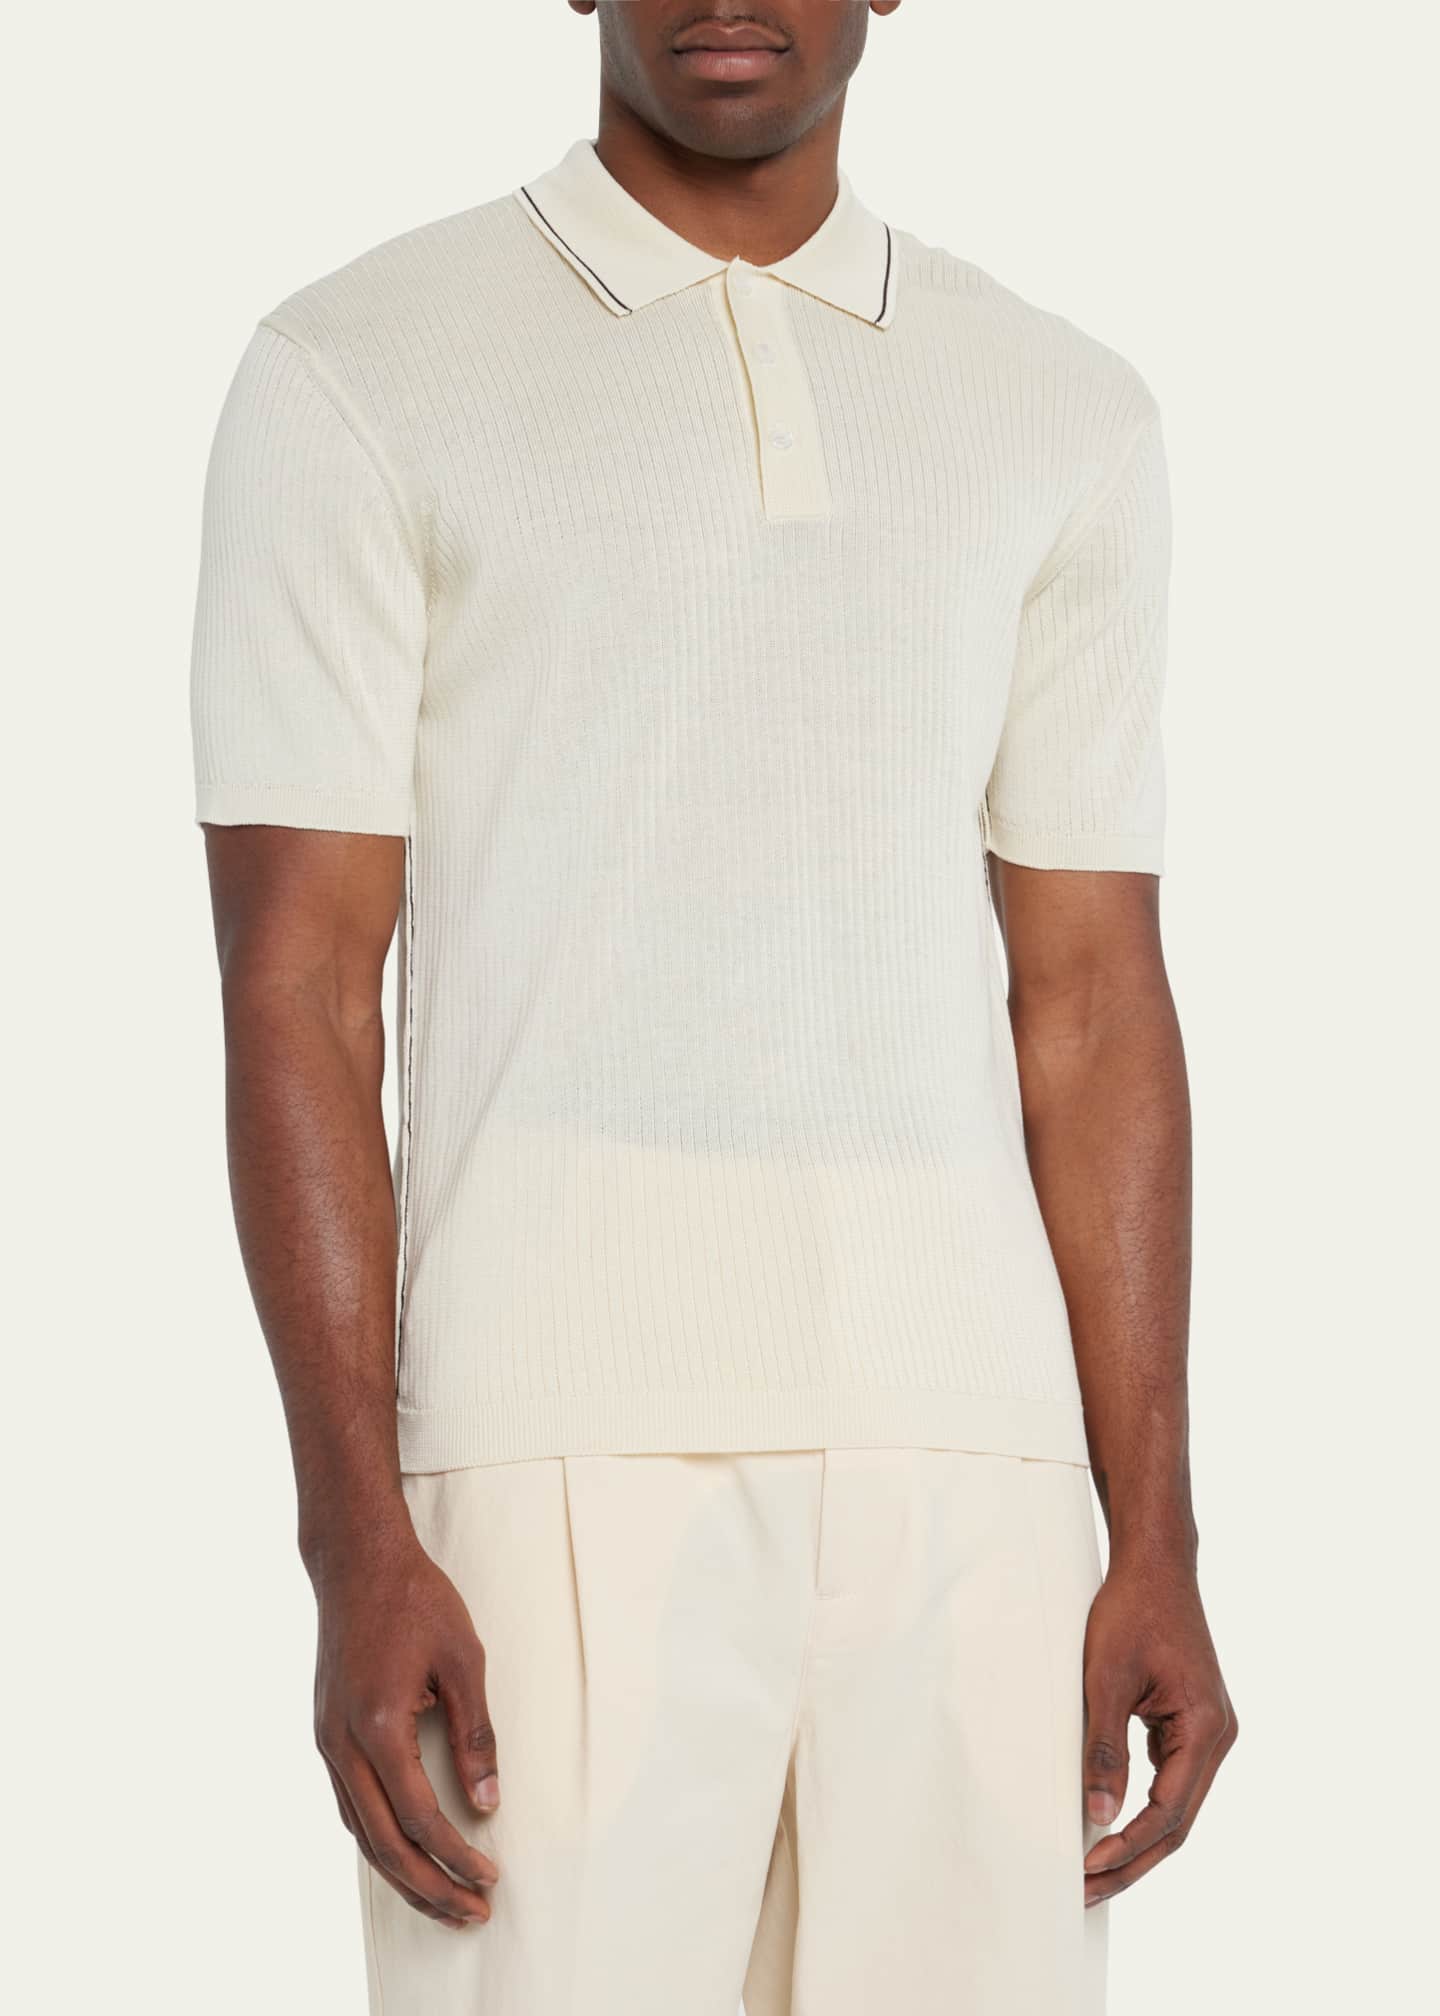 Orlebar Brown Men's Marano Tipped Knit Polo Shirt - Bergdorf Goodman